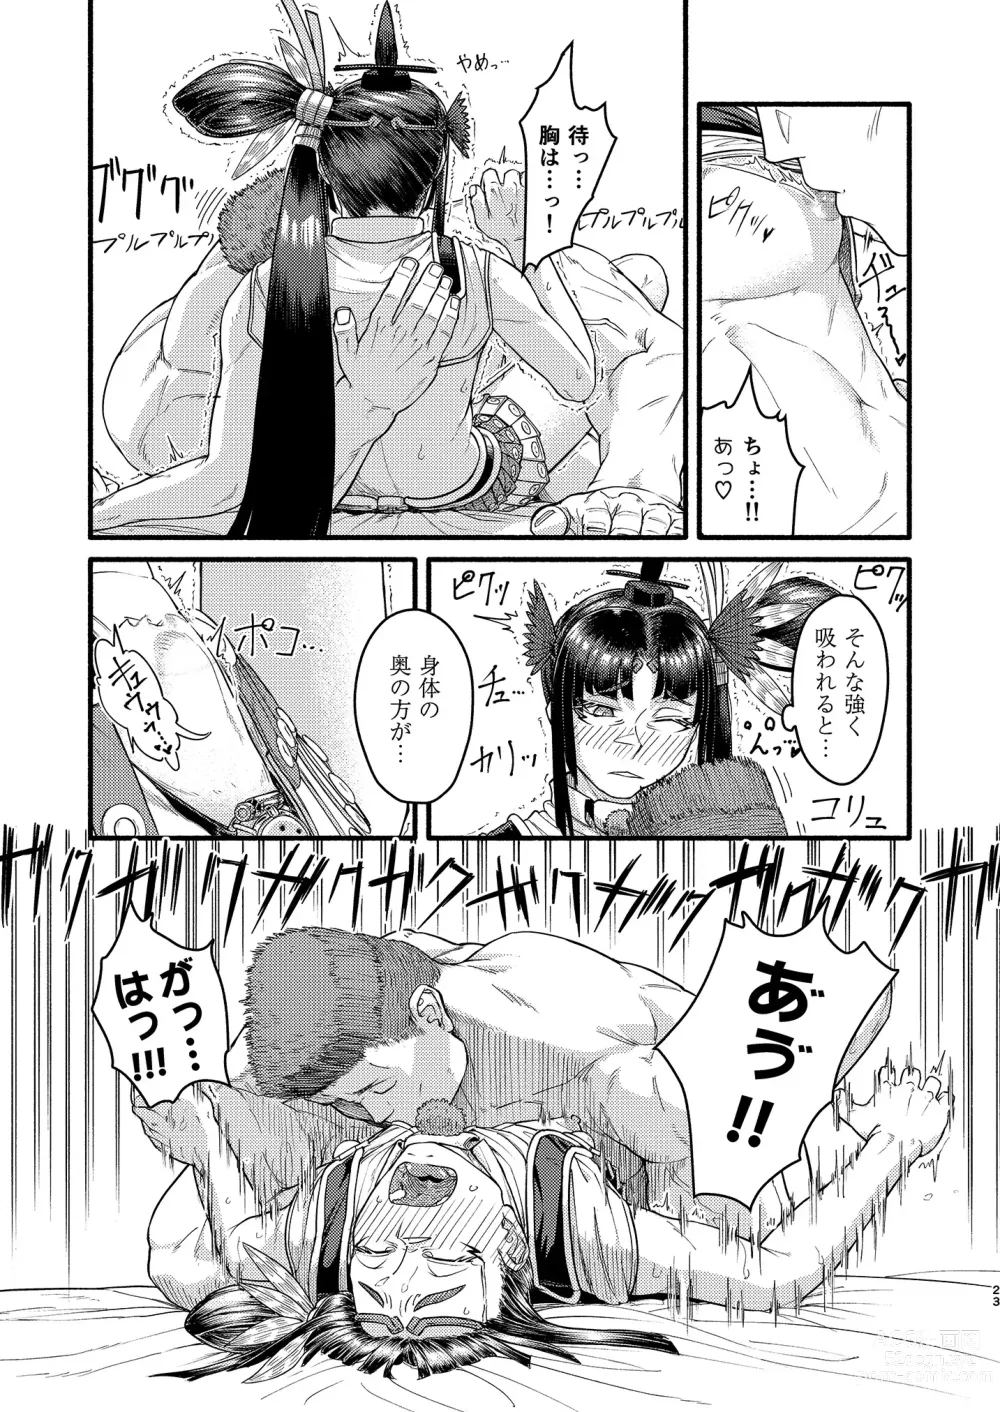 Page 22 of doujinshi MHD-02